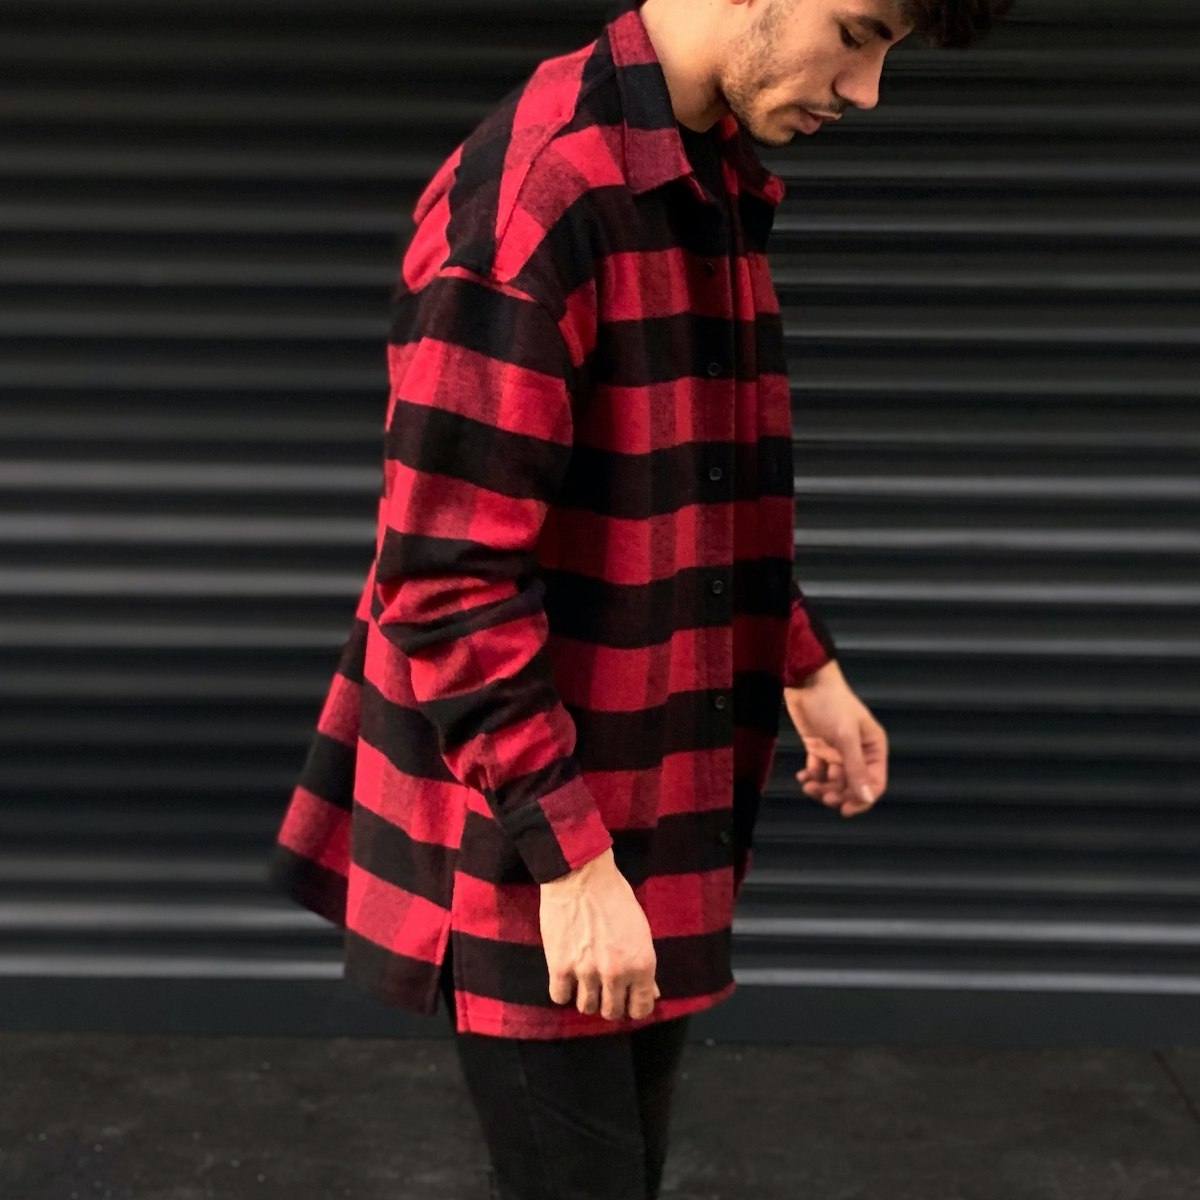 Men's Plaid Woolen Oversize Shirt In Black&Red